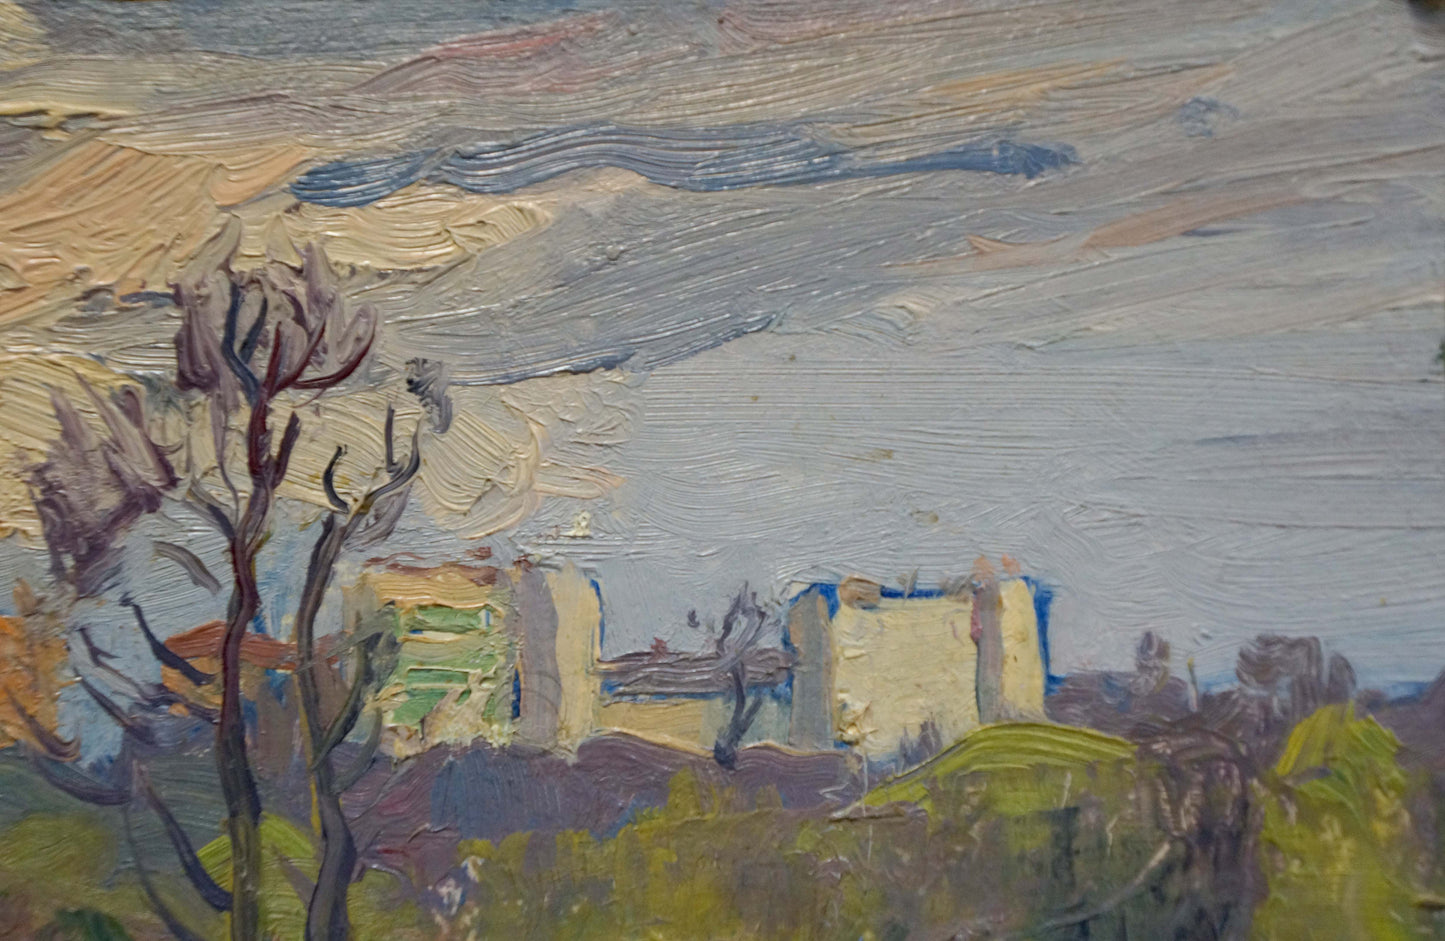 An oil artwork capturing a city view